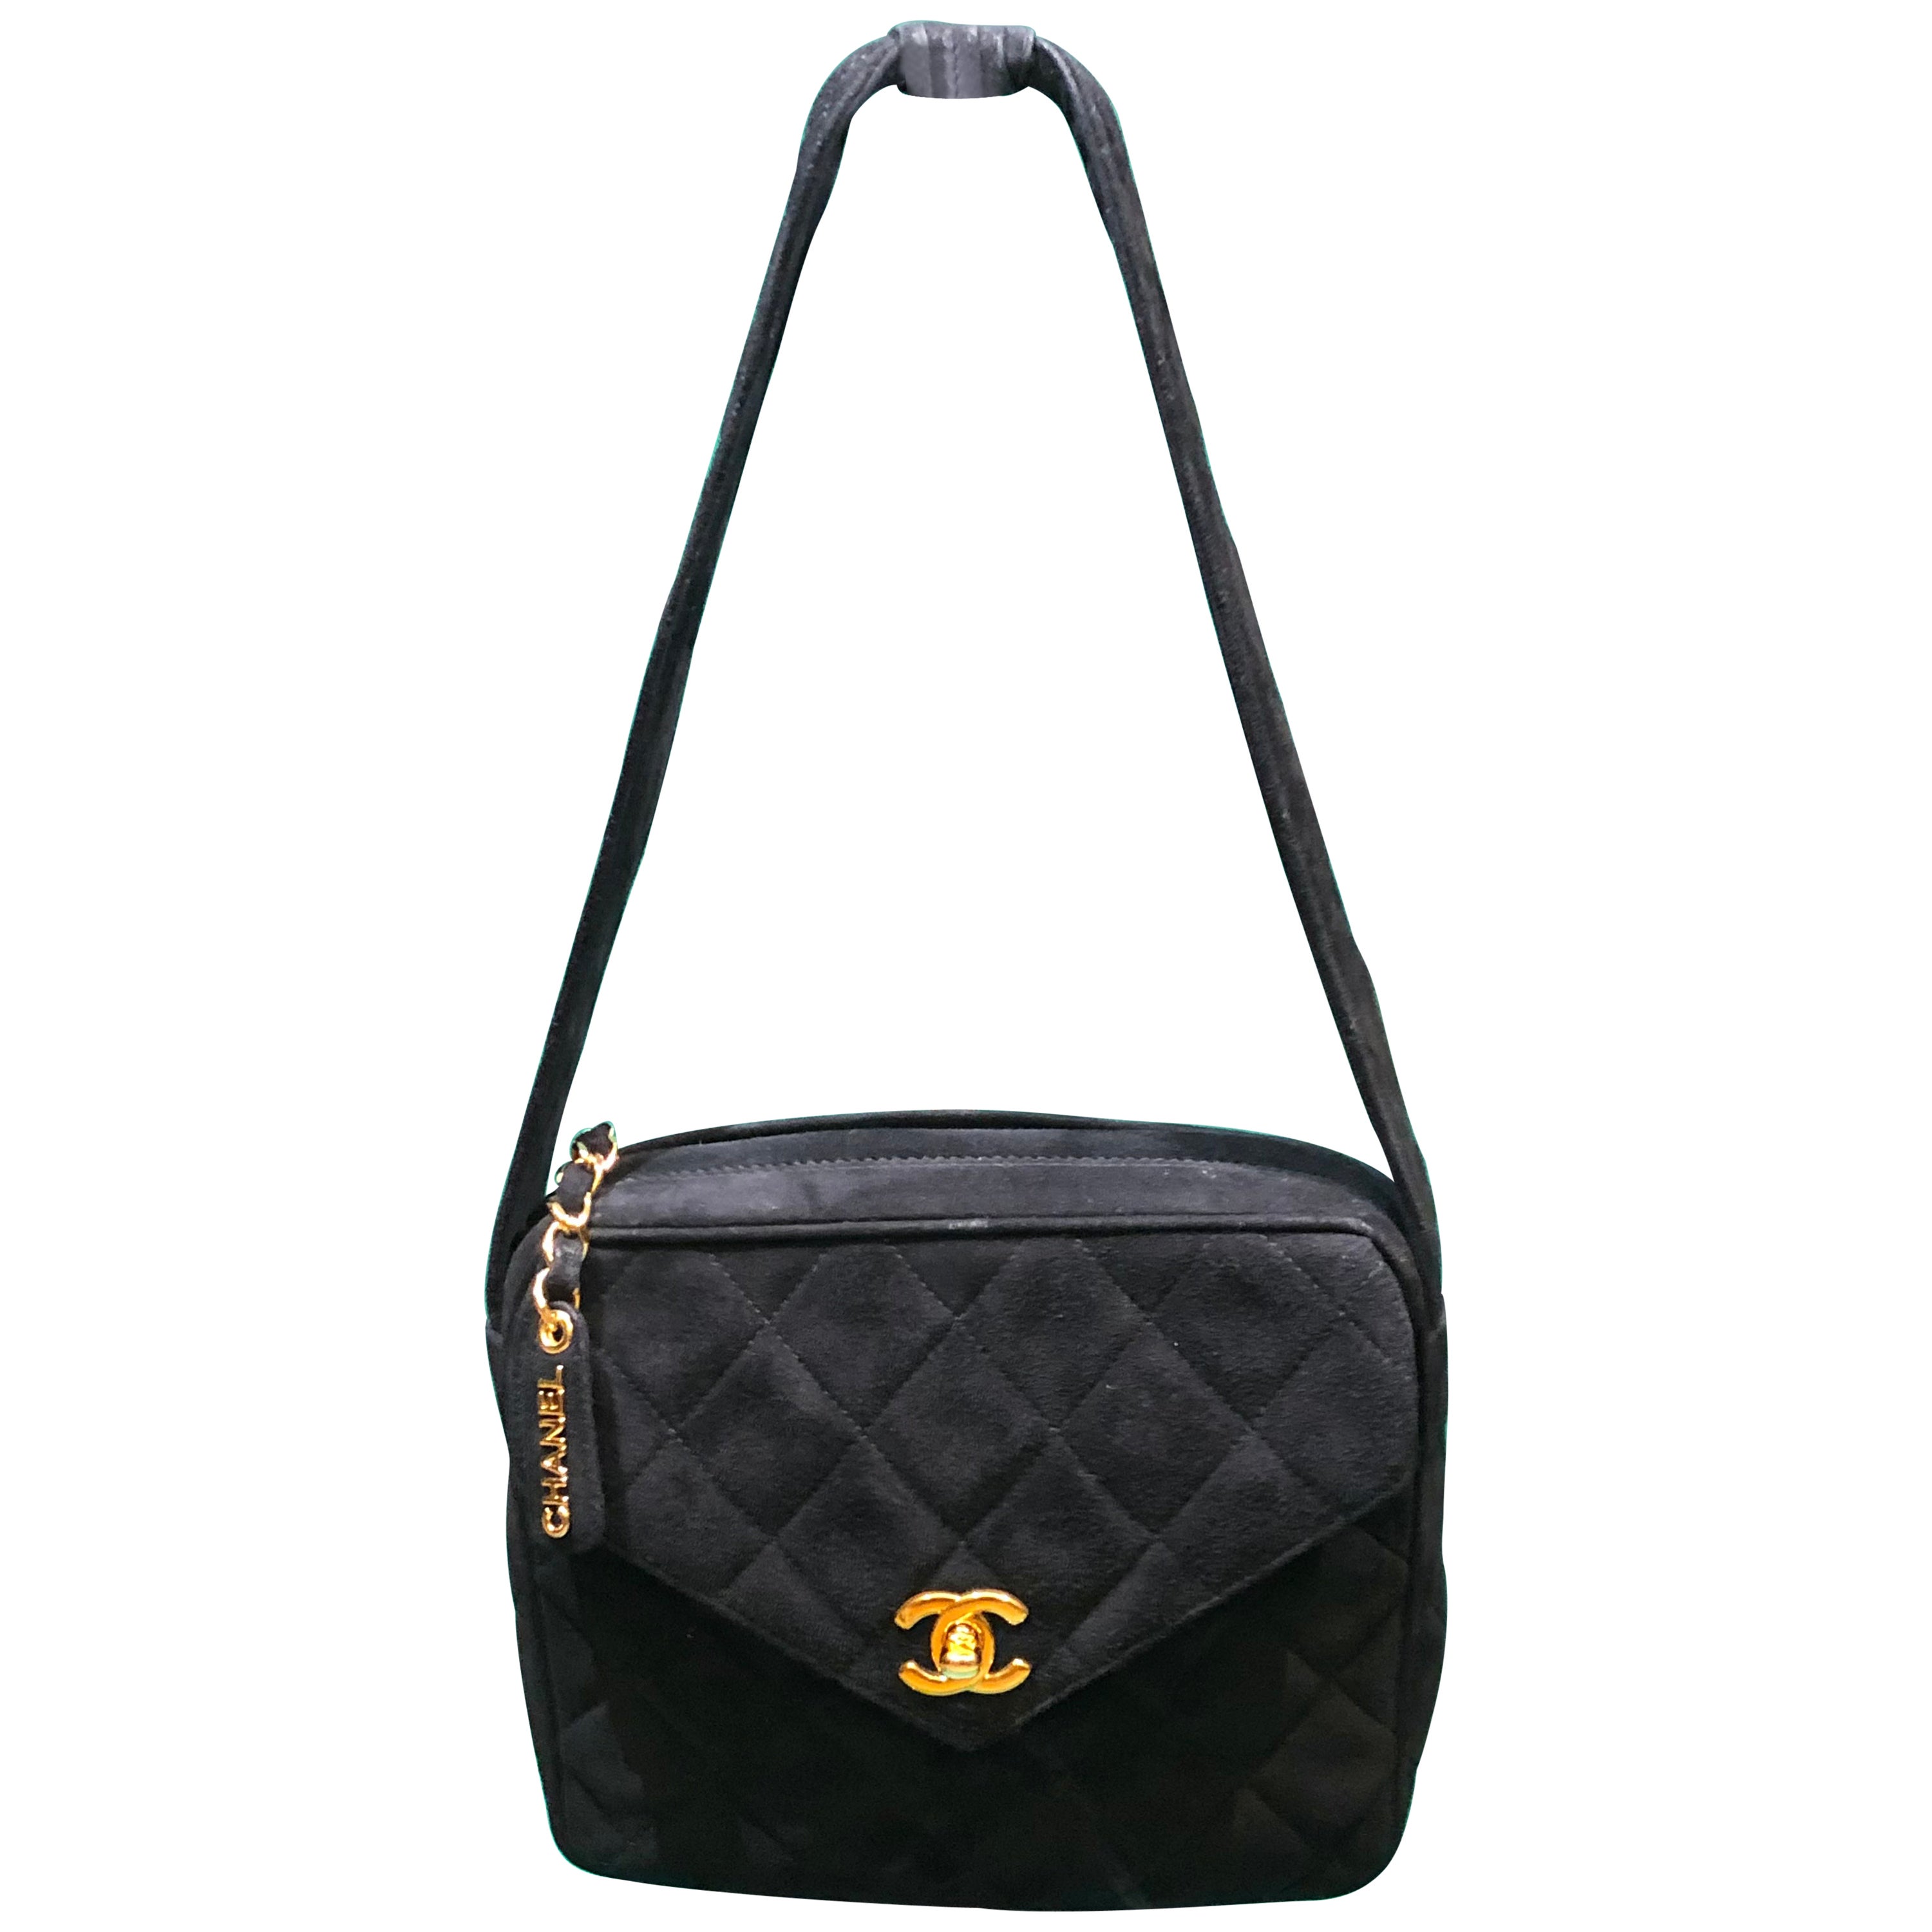 Chanel Black Quilted Suede Handle Handbag  For Sale